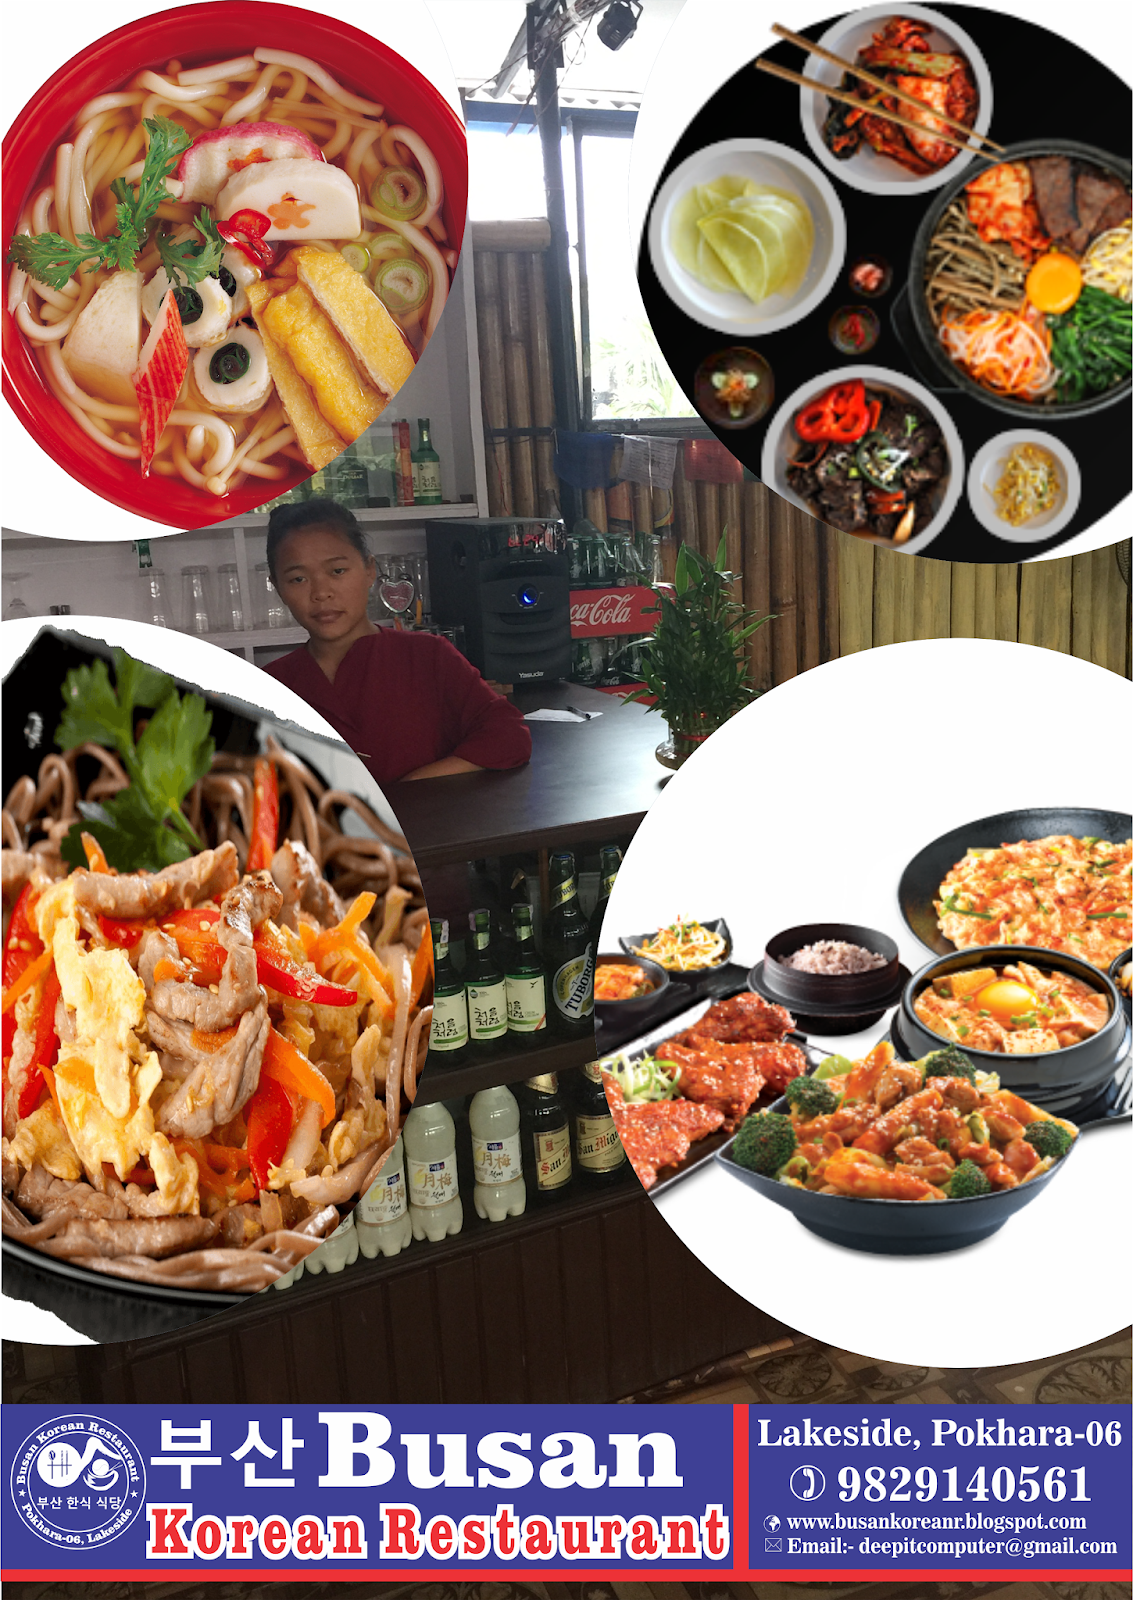 Best Korean Restaurant In Pokhara - Busan Korean Restaurant